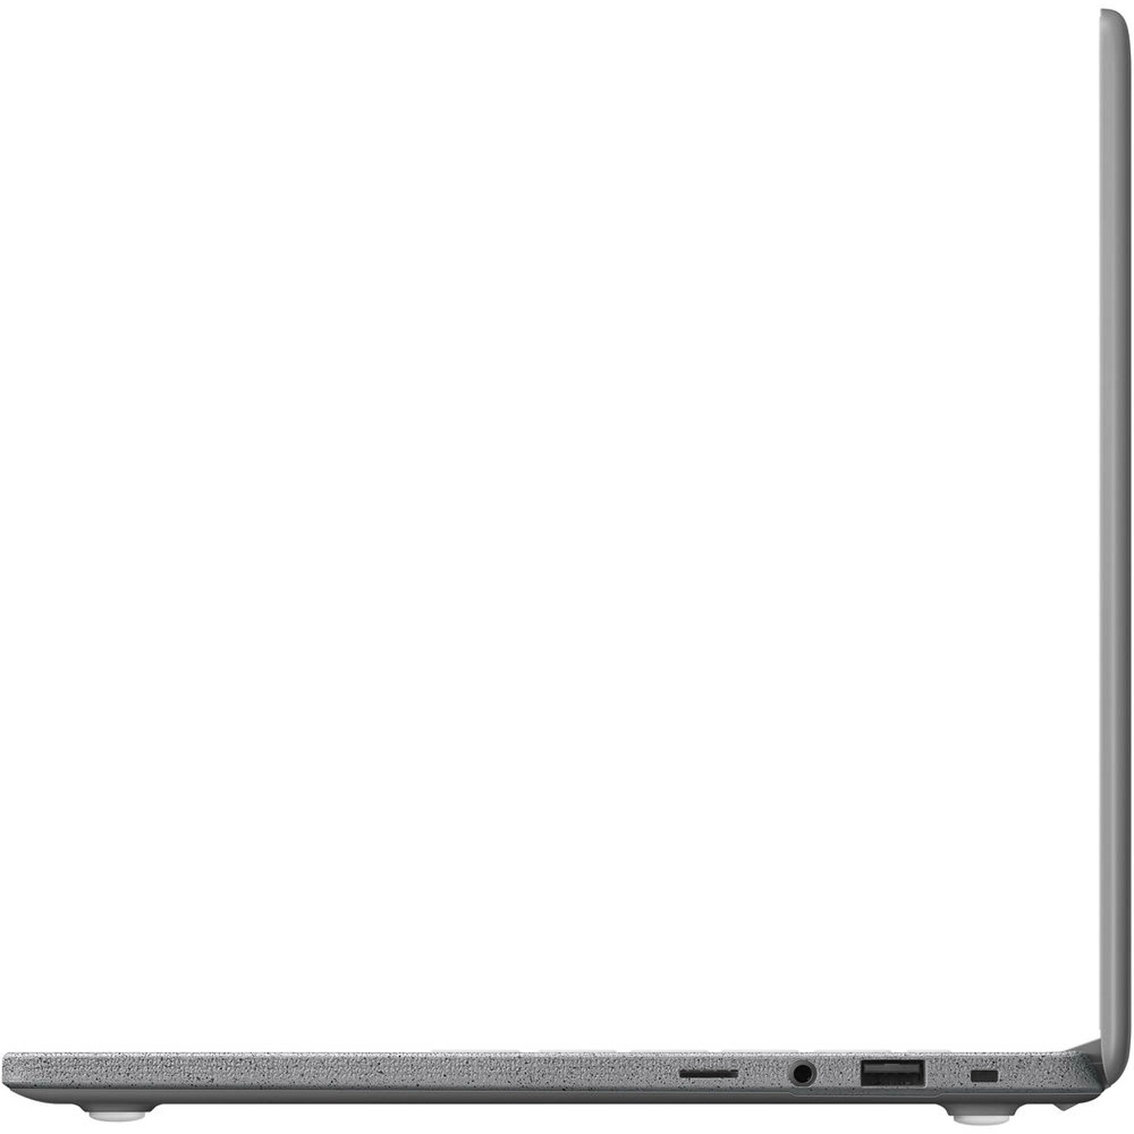 Samsung Notebook Flash - Image 9 of 9